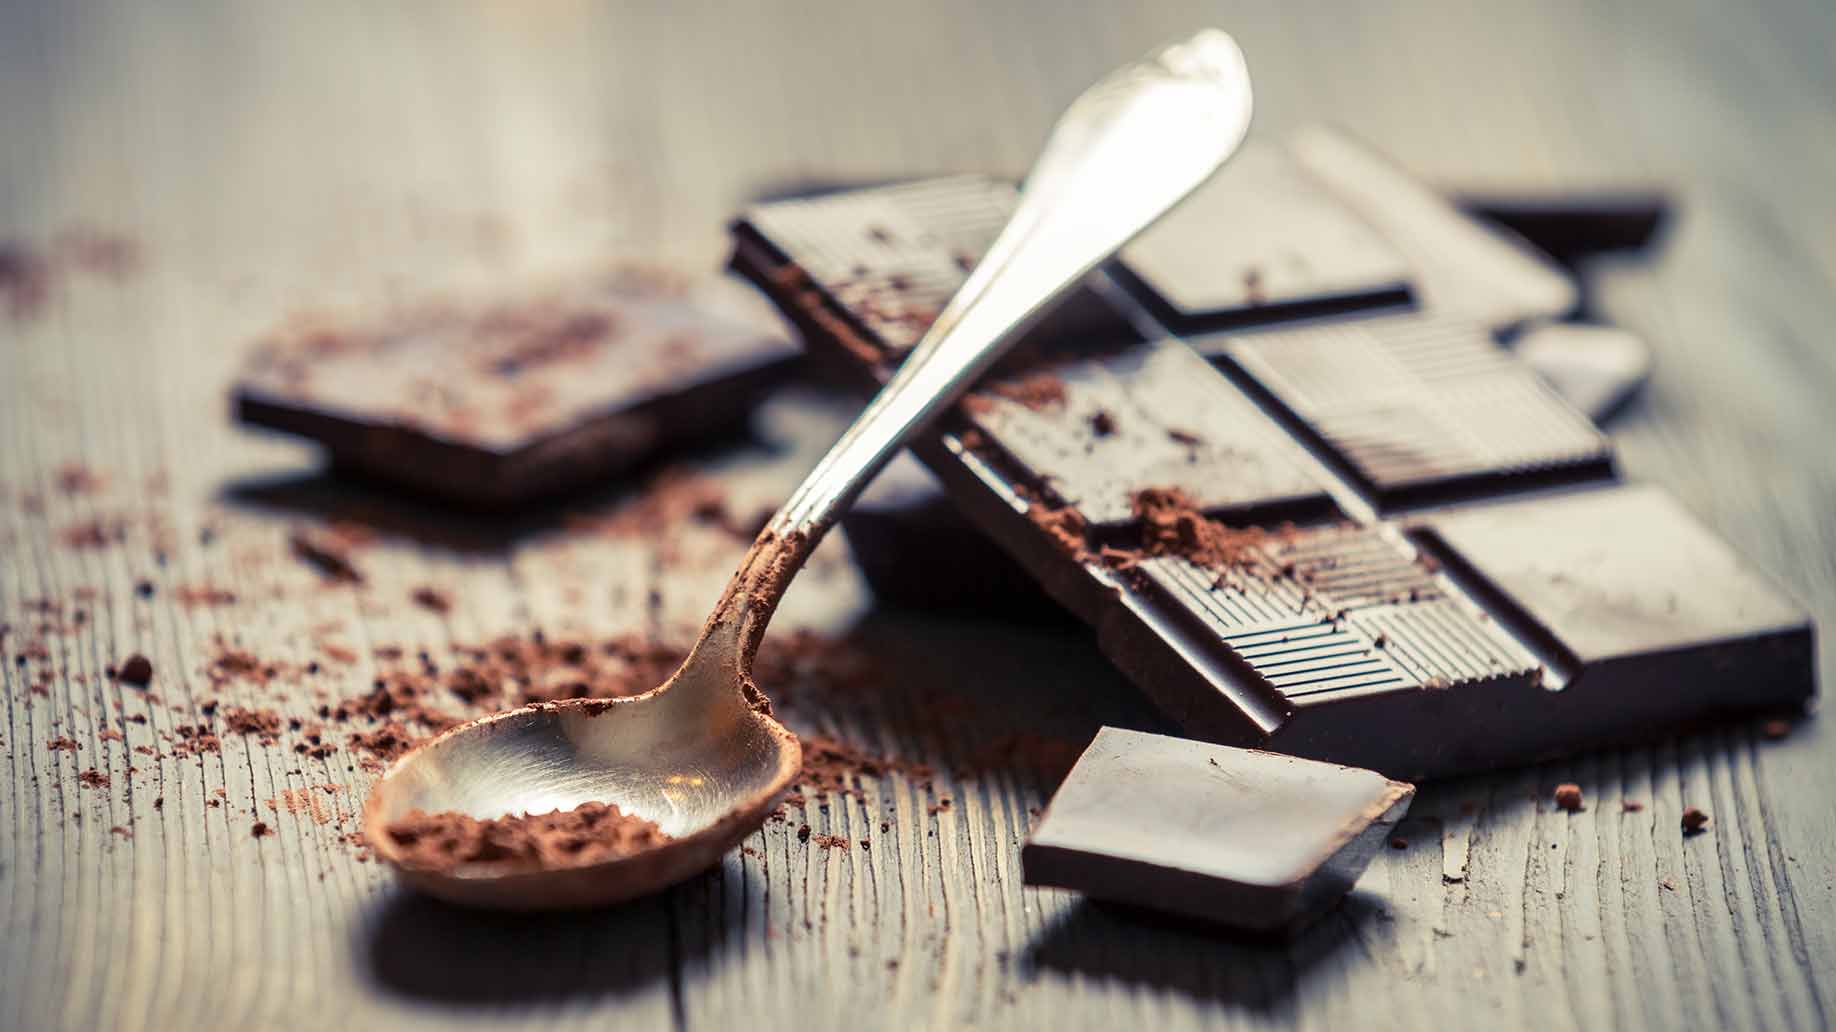 dark chocolate antioxidant health benefit flavonol cocoa anti-inflammatory